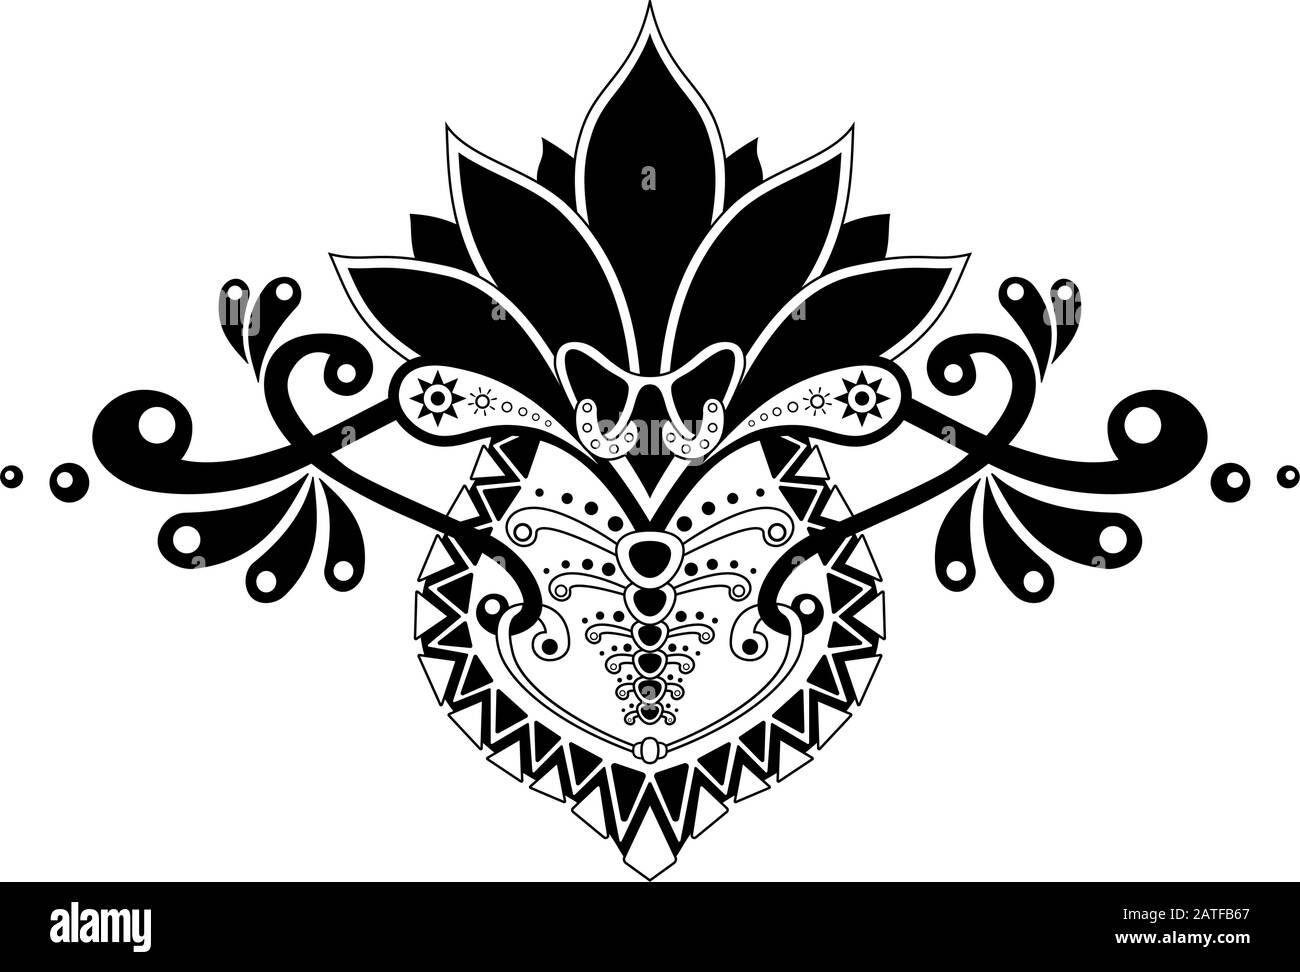 Ethnic pattern whith organic motif, isolatid in white background ...